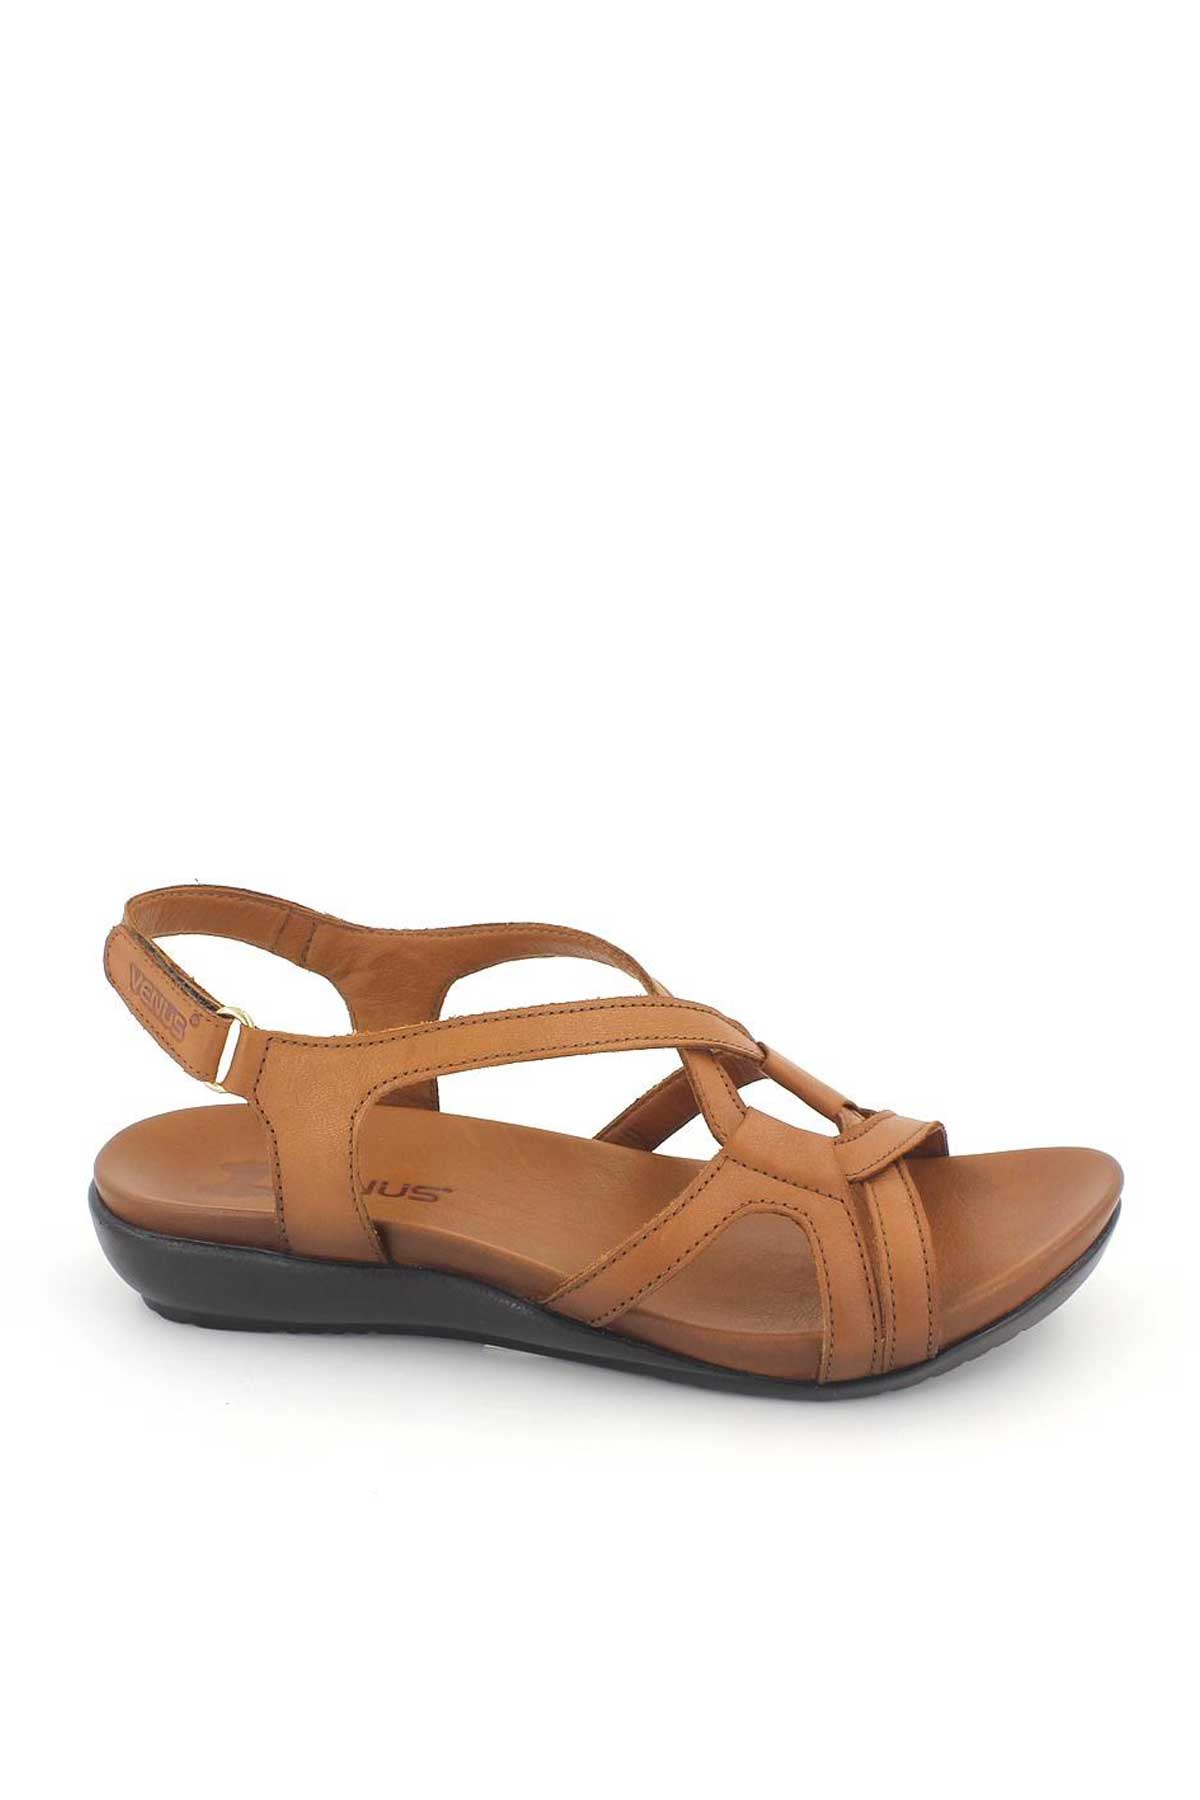 Kadın Comfort Sandalet Taba 206Y - Thumbnail